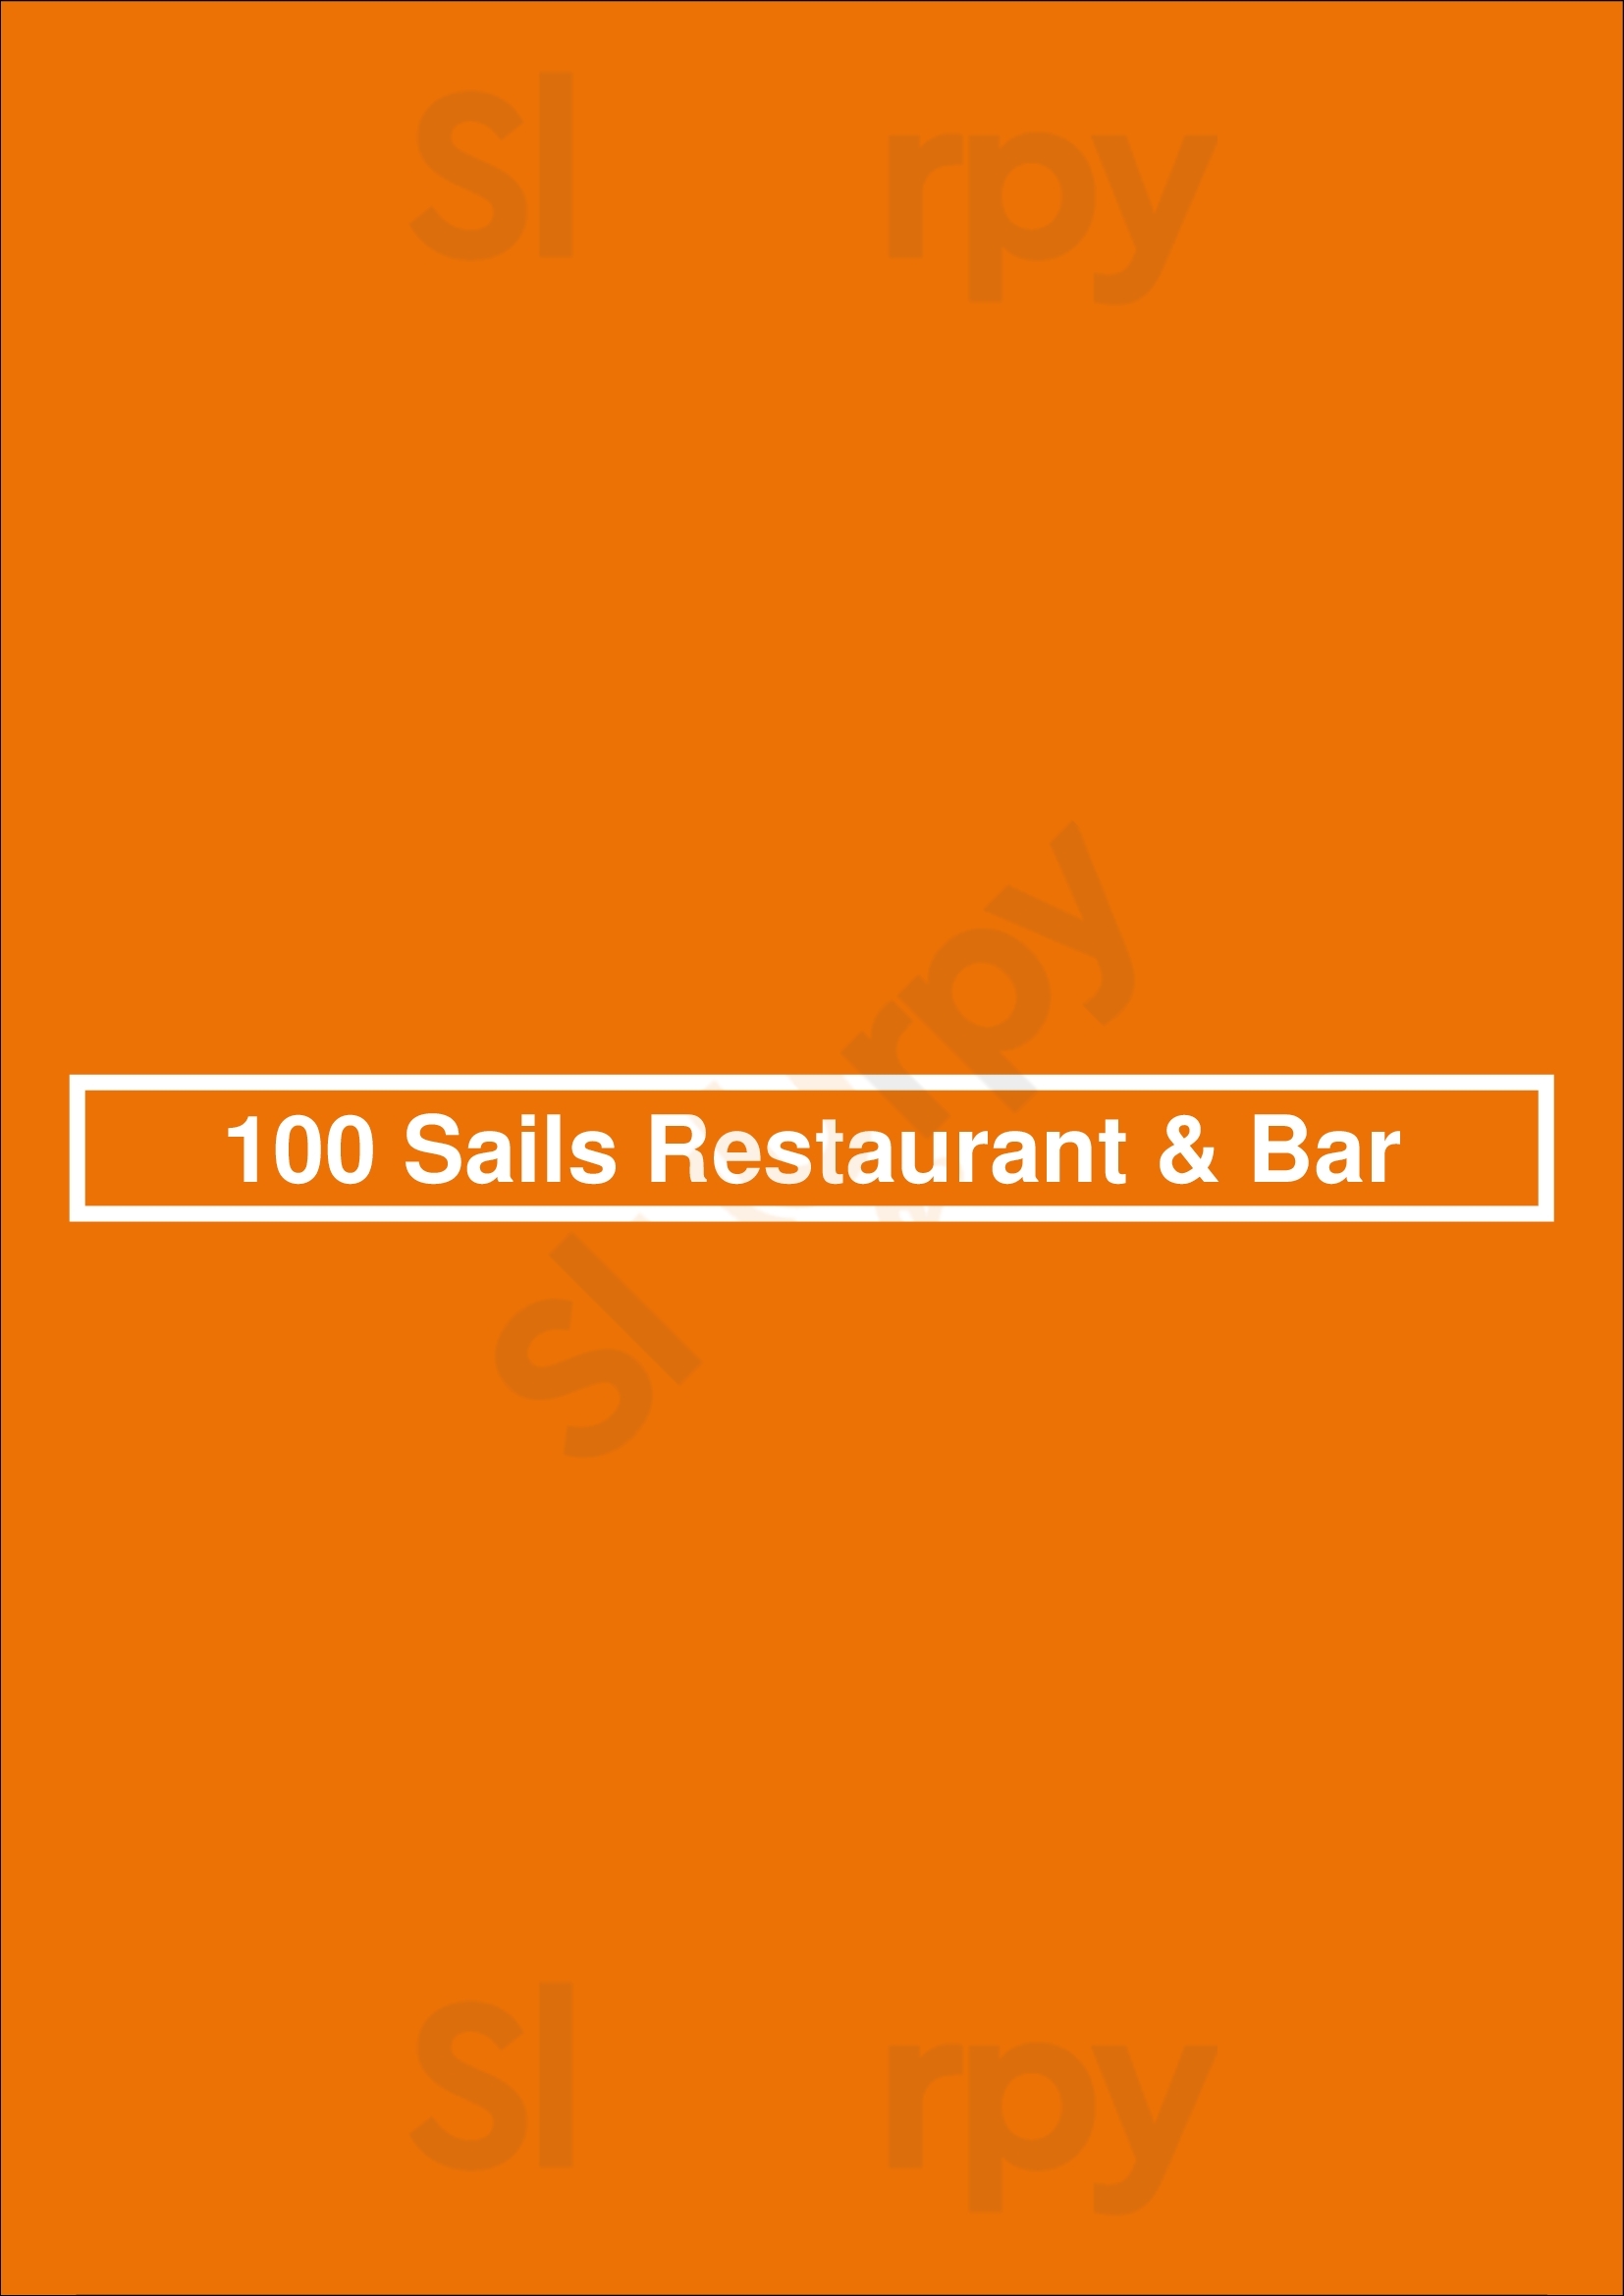 100 Sails Restaurant & Bar Honolulu Menu - 1